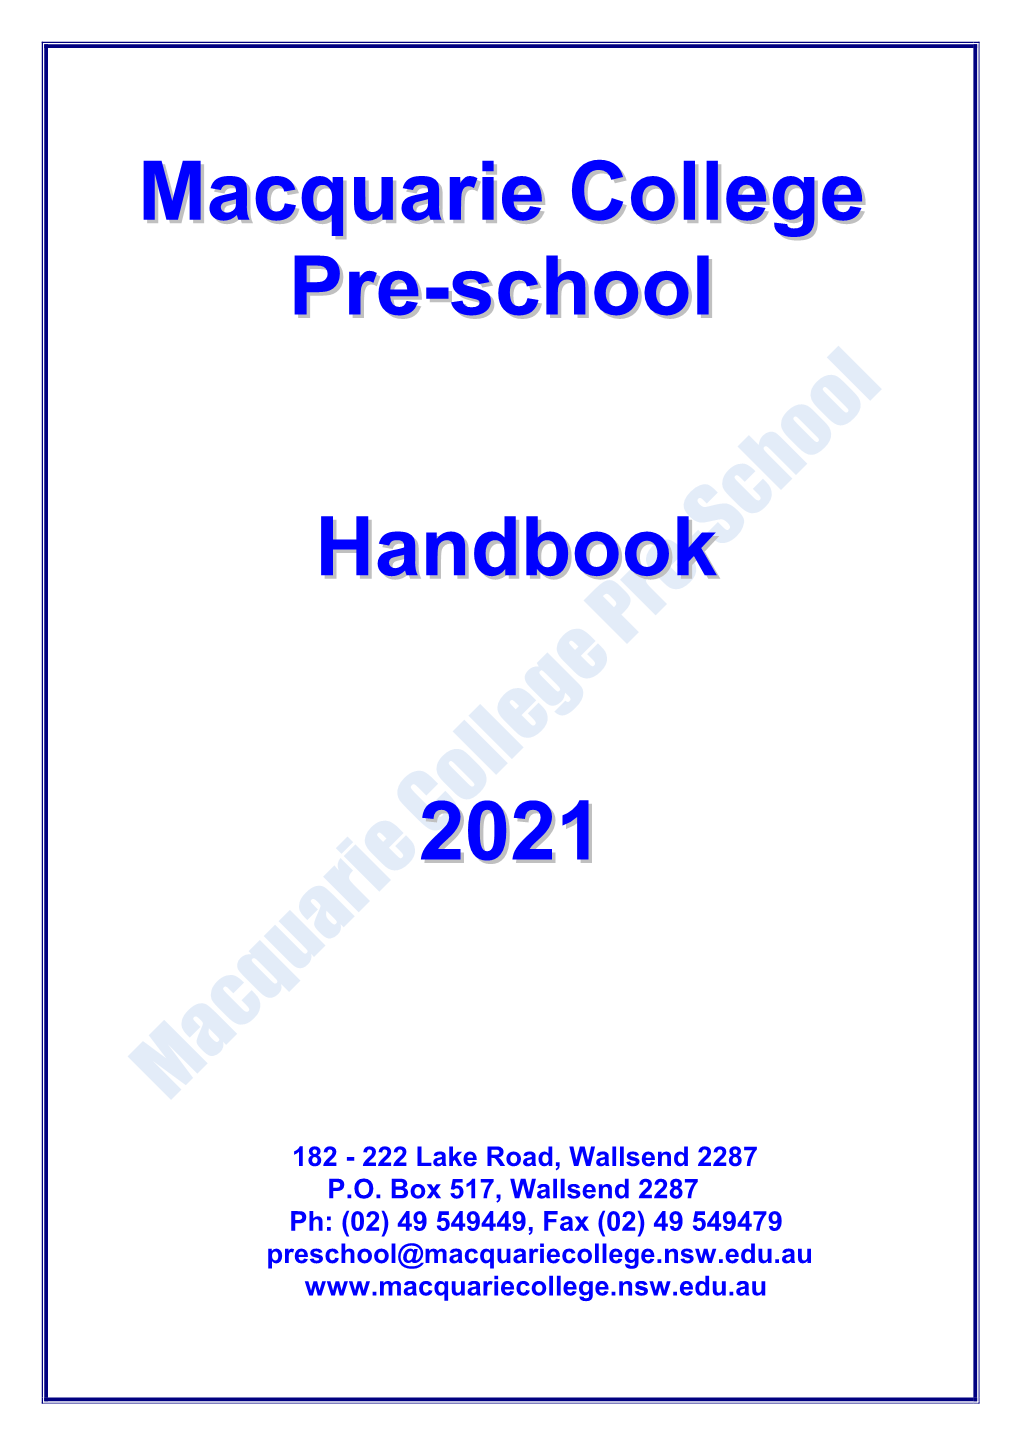 Macquarie College Pre-School Handbook 2021